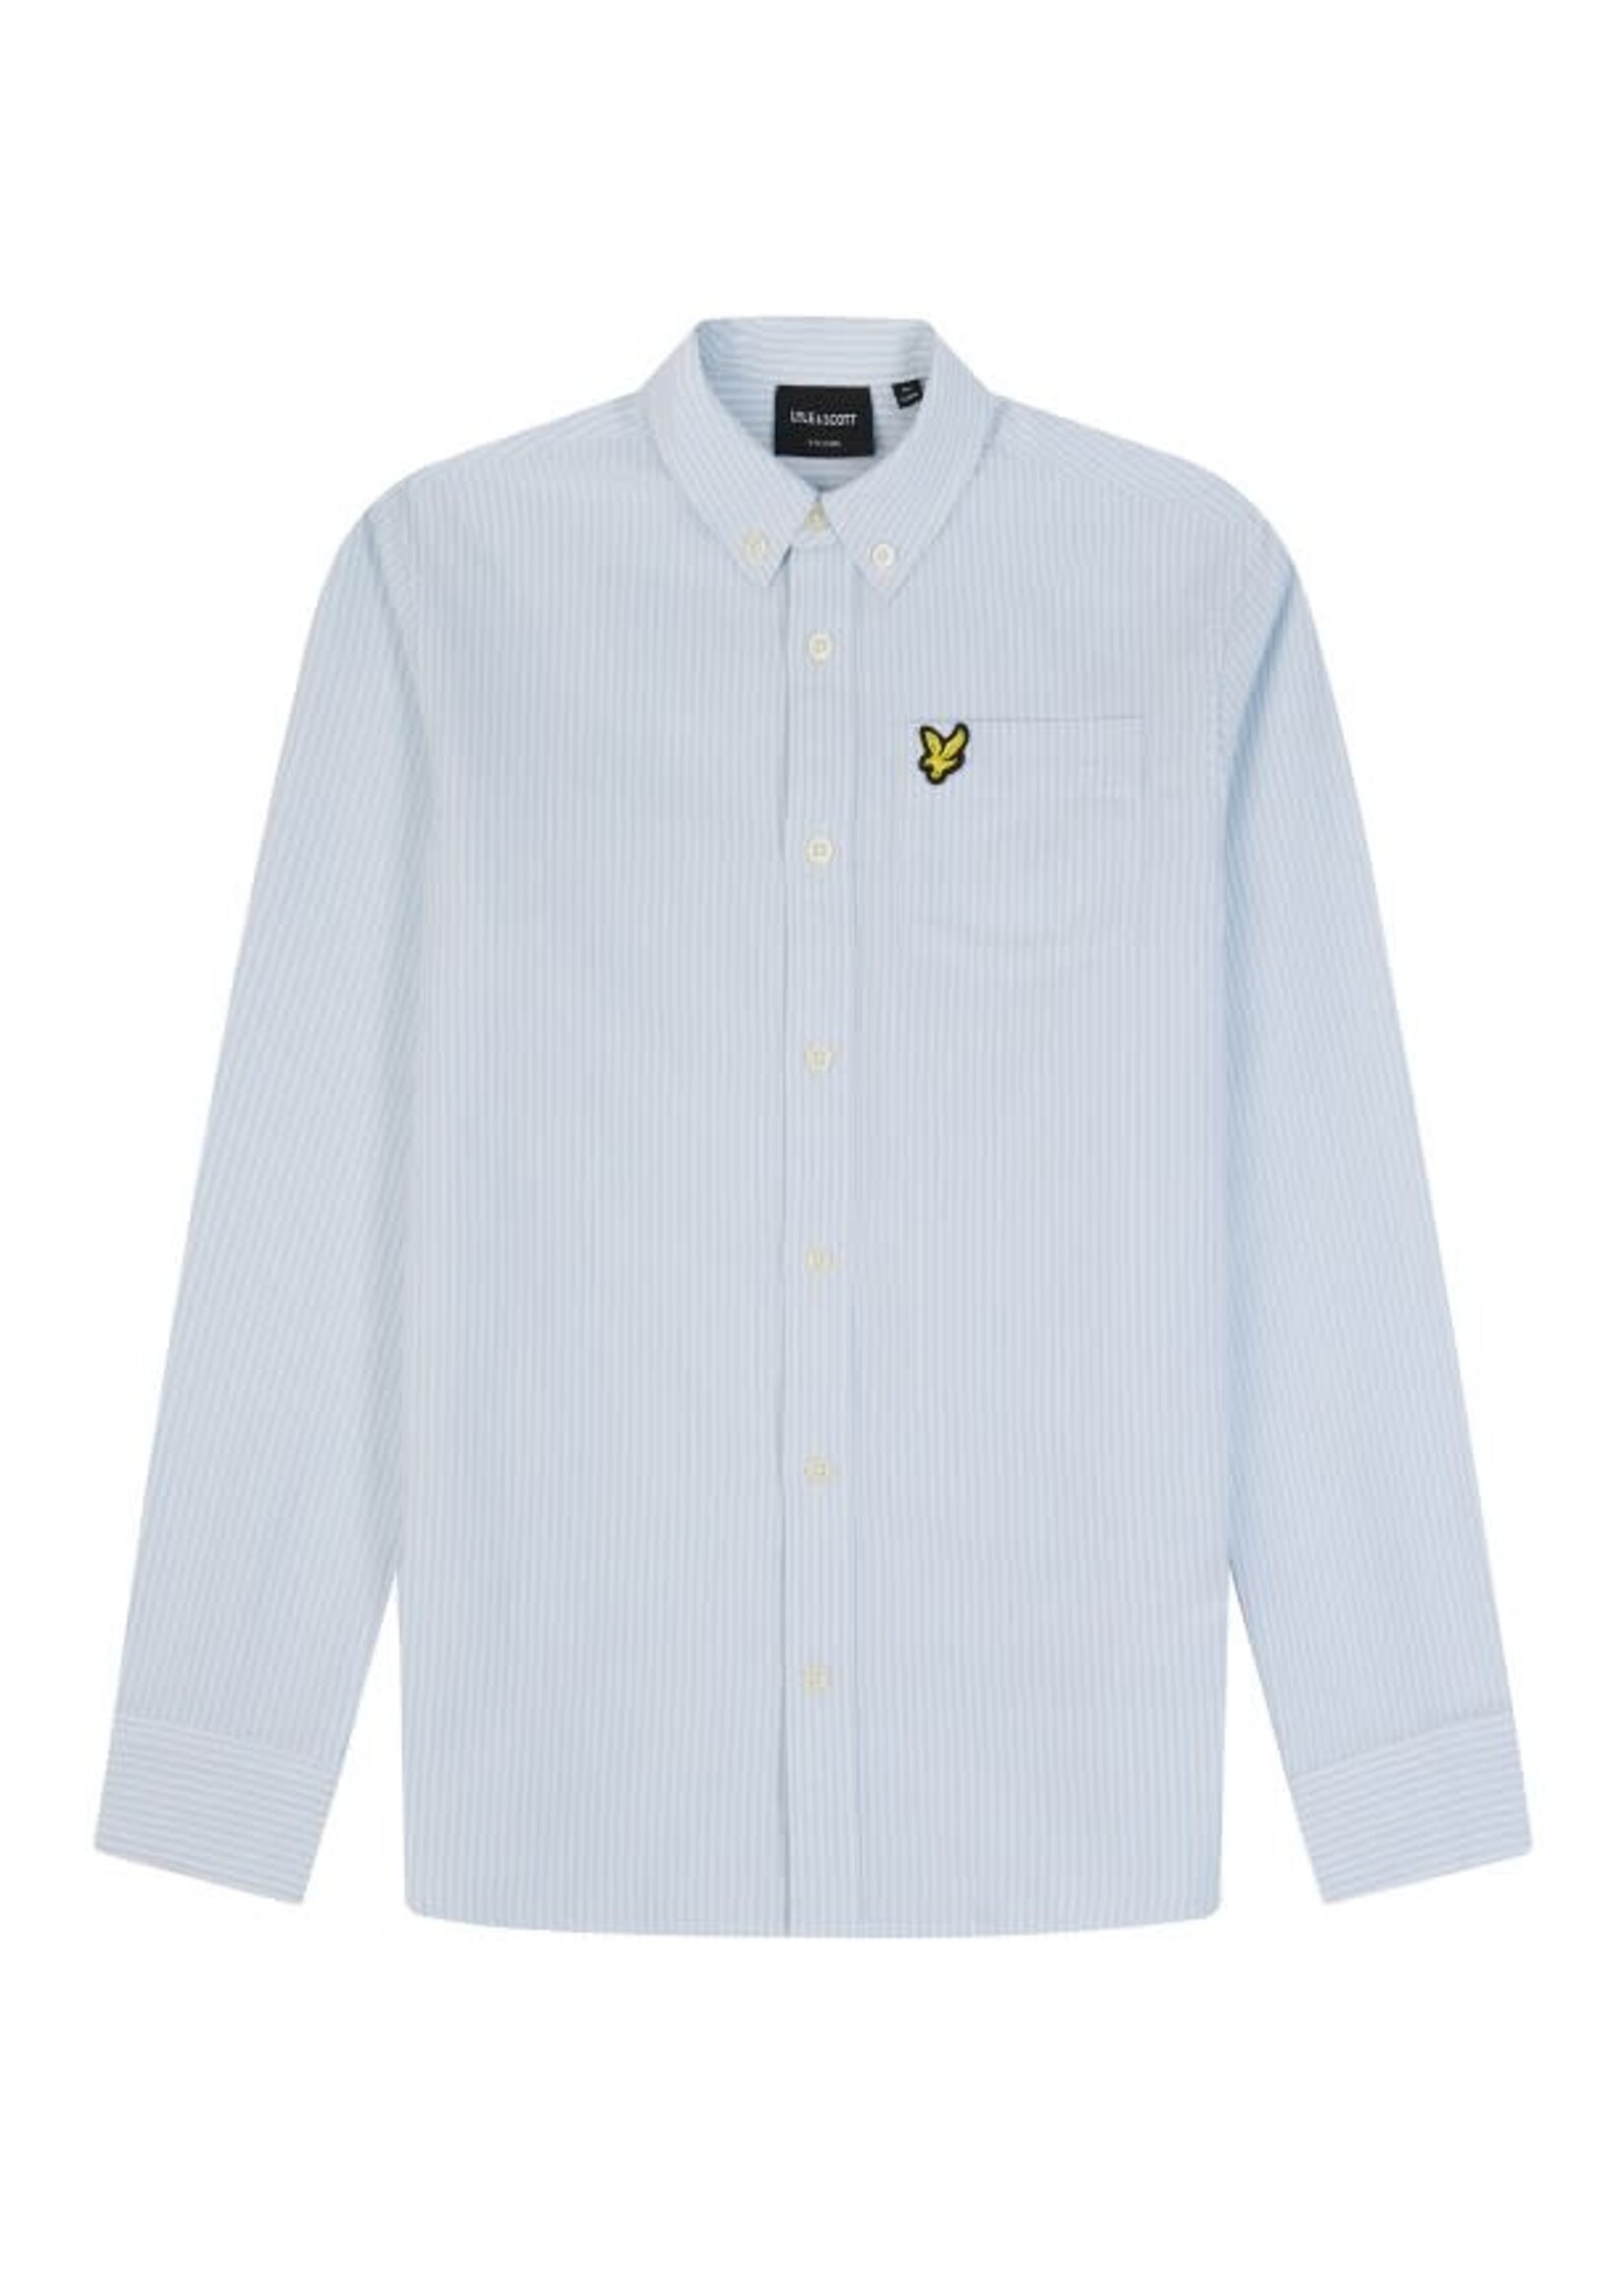 Lyle&Scott Lyle&Scott Stripe Oxford Shirt W490 Light Blue/ White - LWB2002V